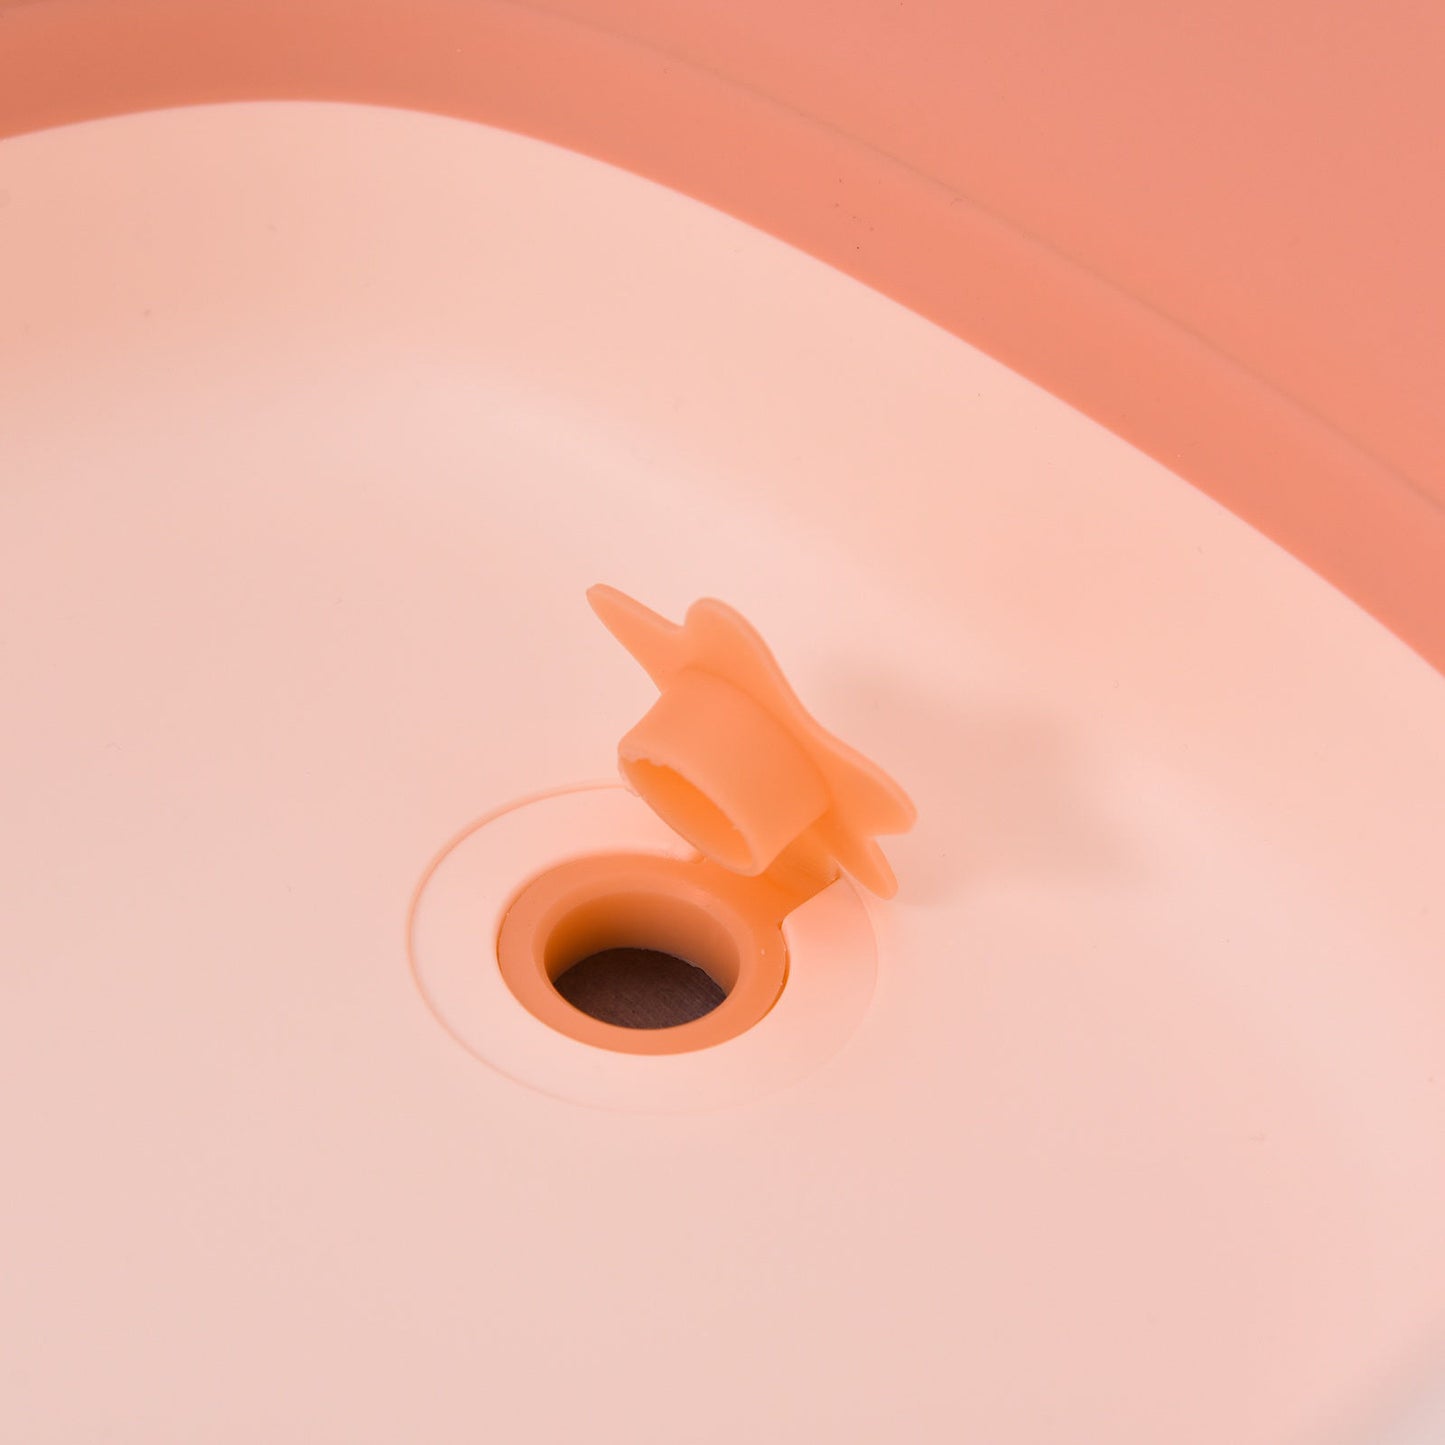 Nancy's Allemand Ergonomic Baby Bath - Pink - Pe, Tpe - 33.26 cm x 19.88 cm x 4.13 cm